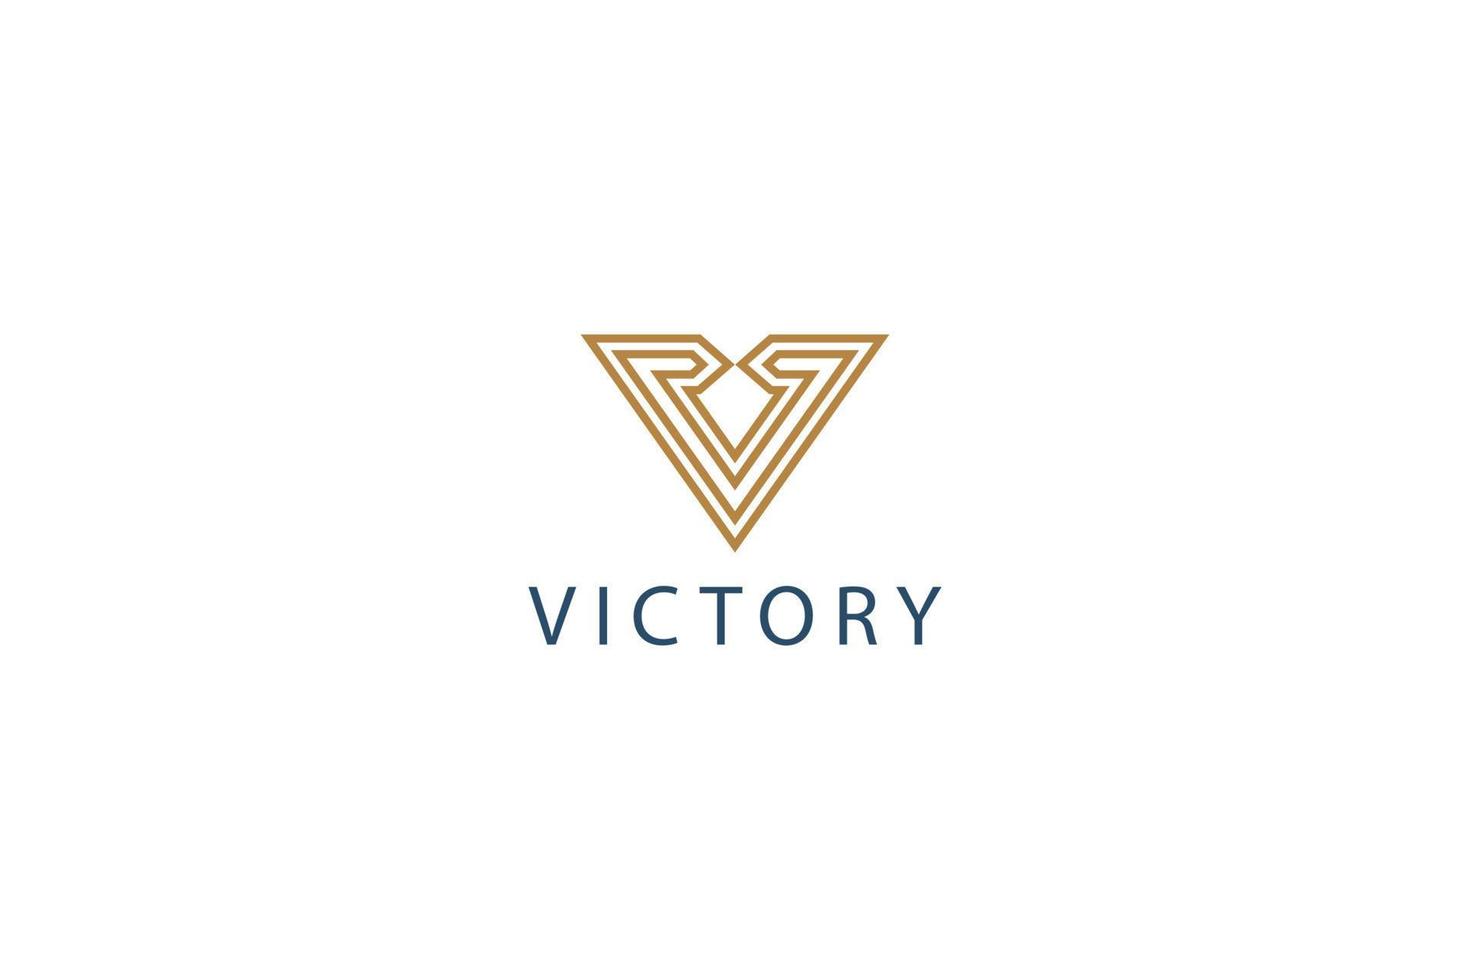 Letter V simple and line art creative business logo design vector